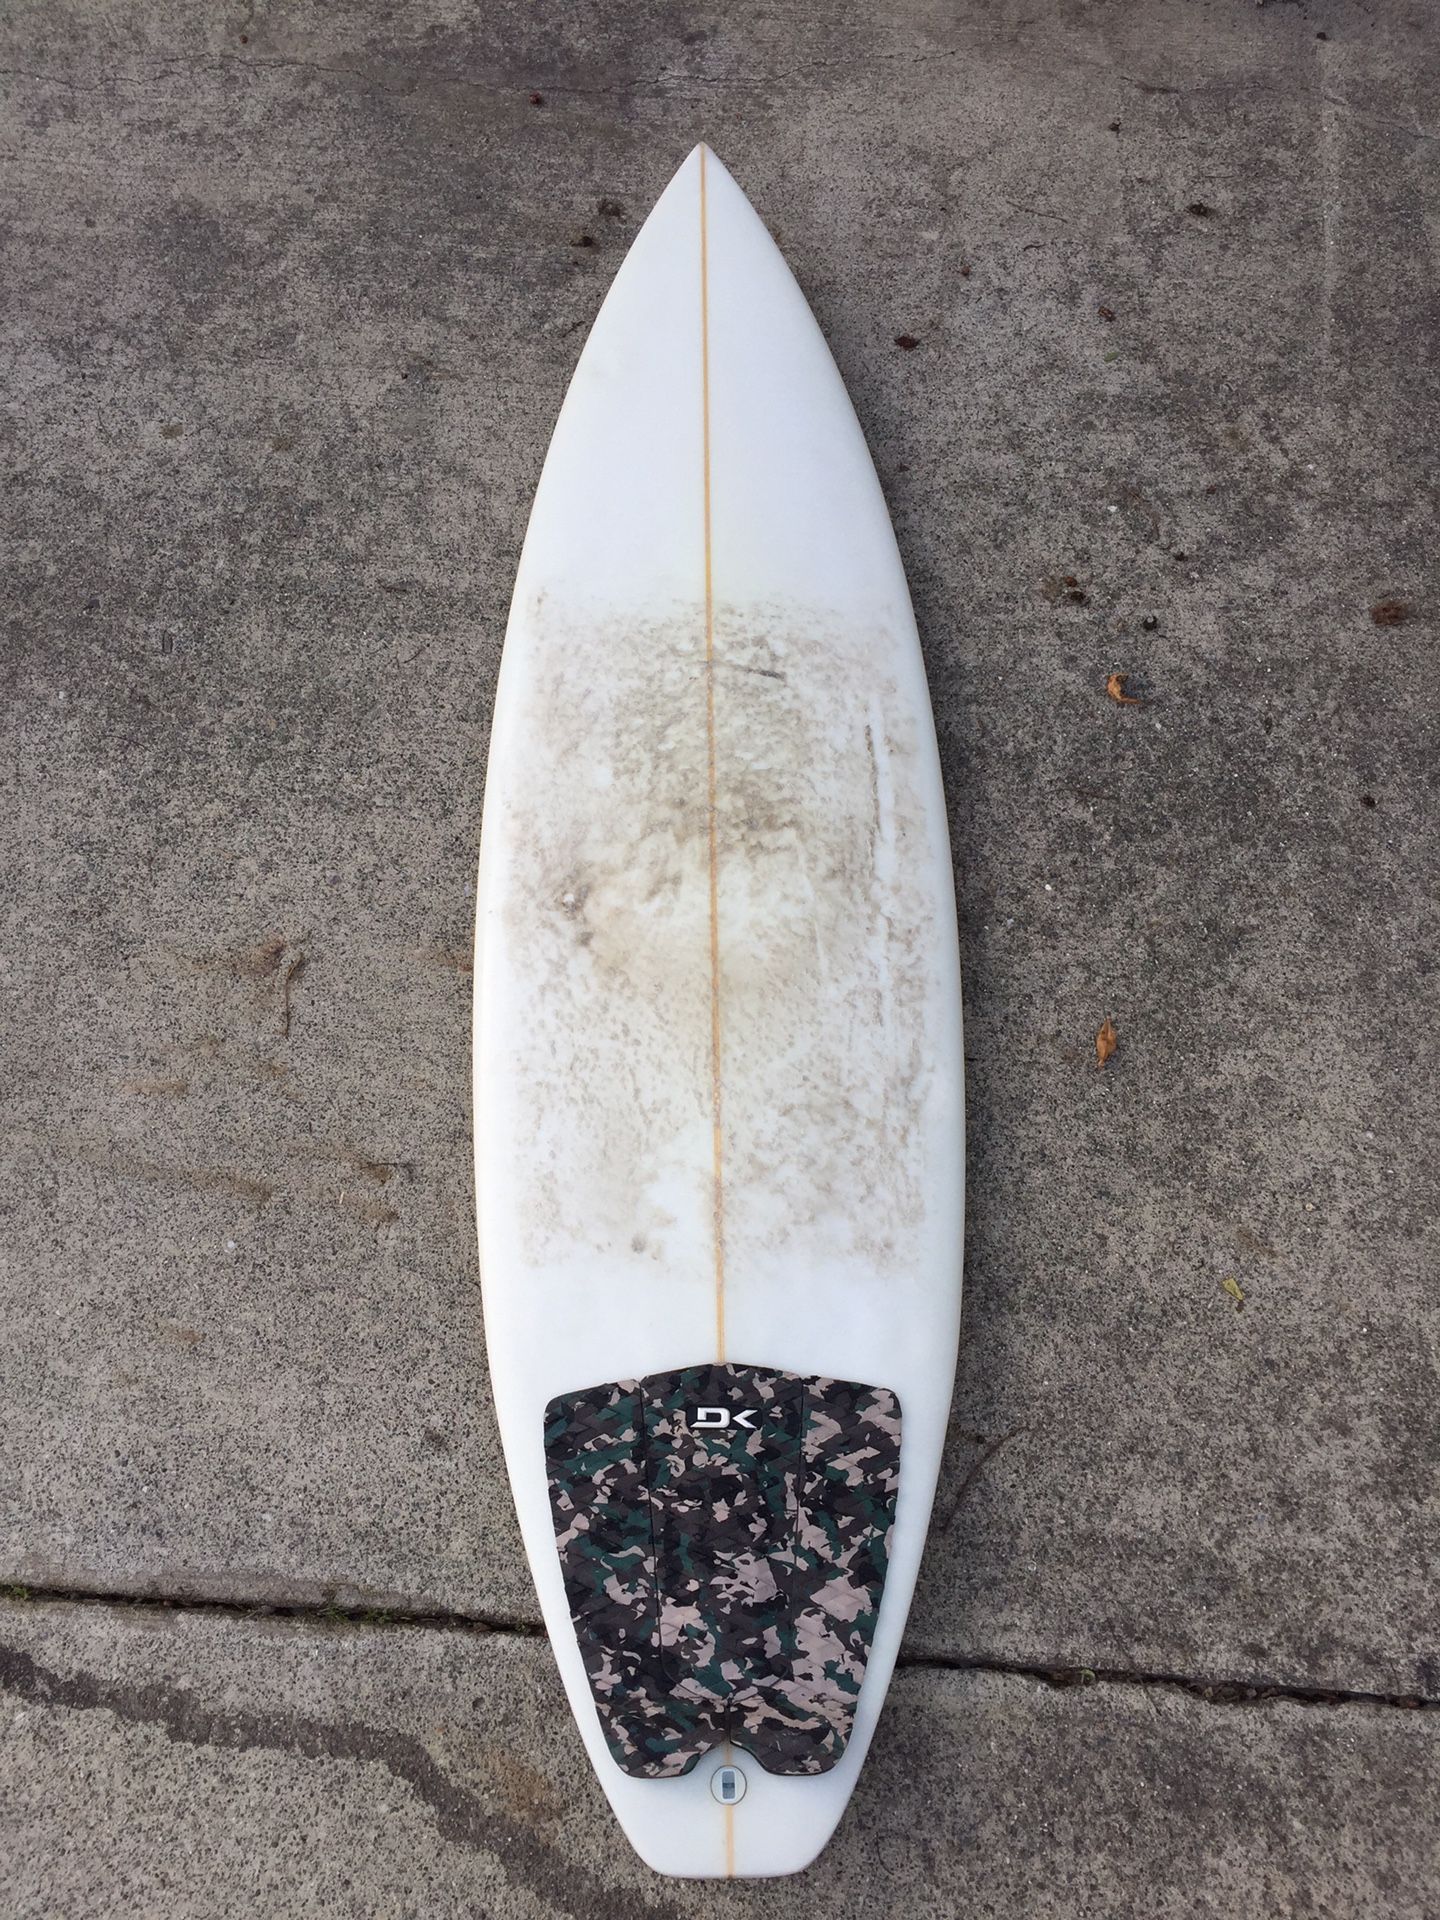 Cole surfboard